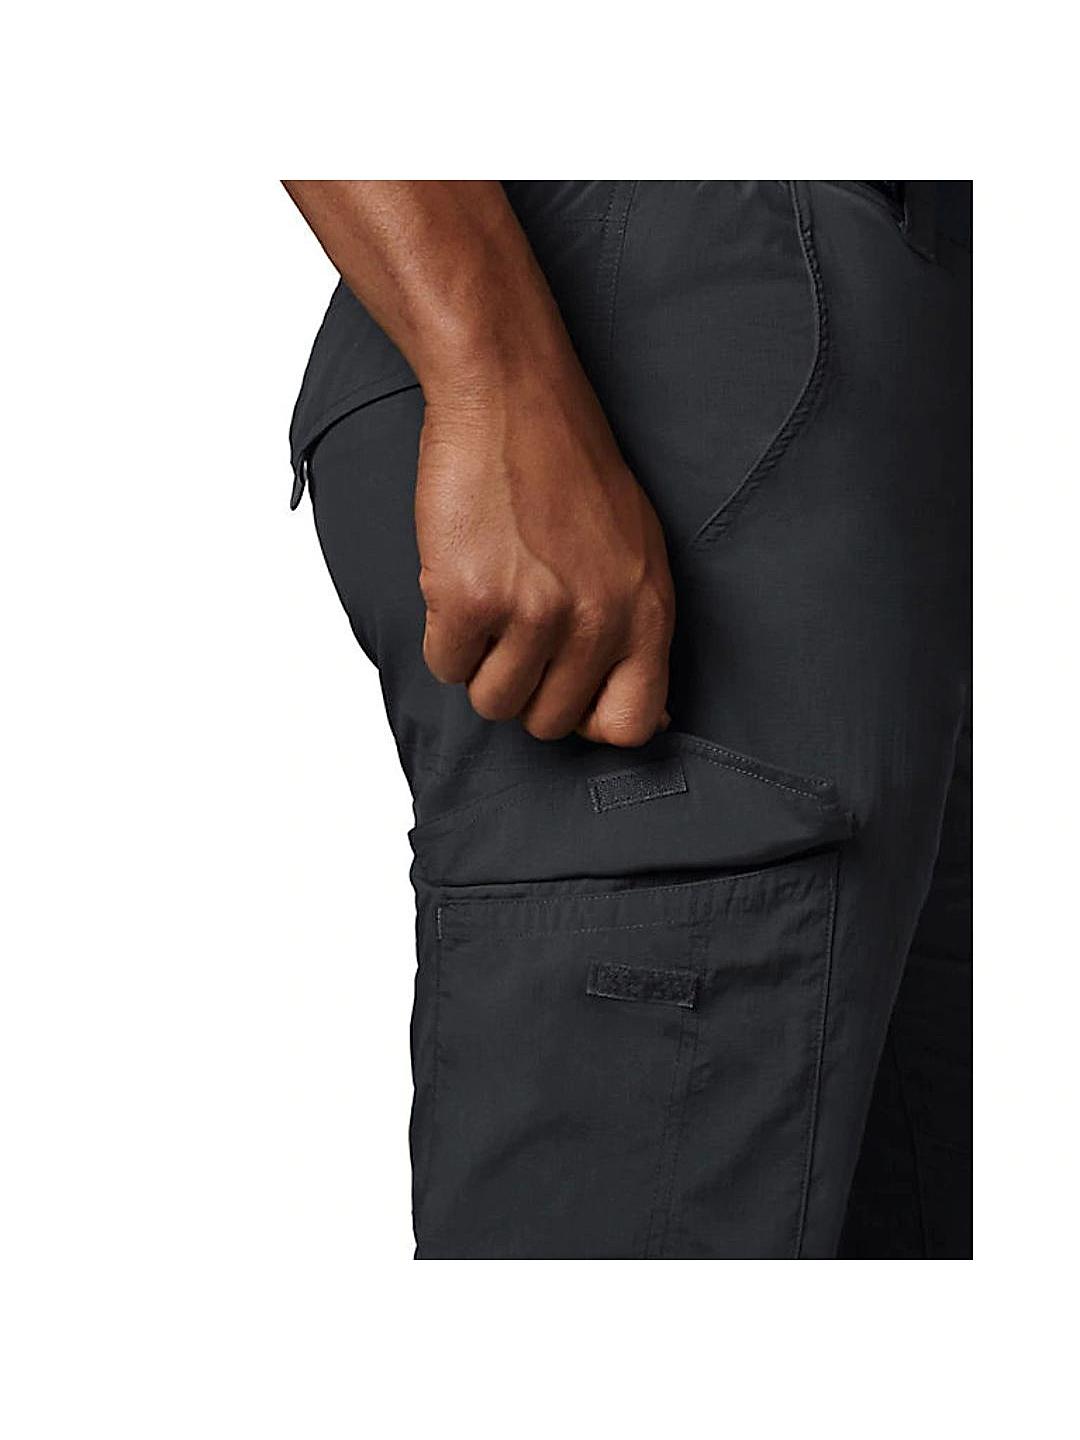 Buy Black Tech Trail Ii Pant for Men Online at Columbia Sportswear  488047